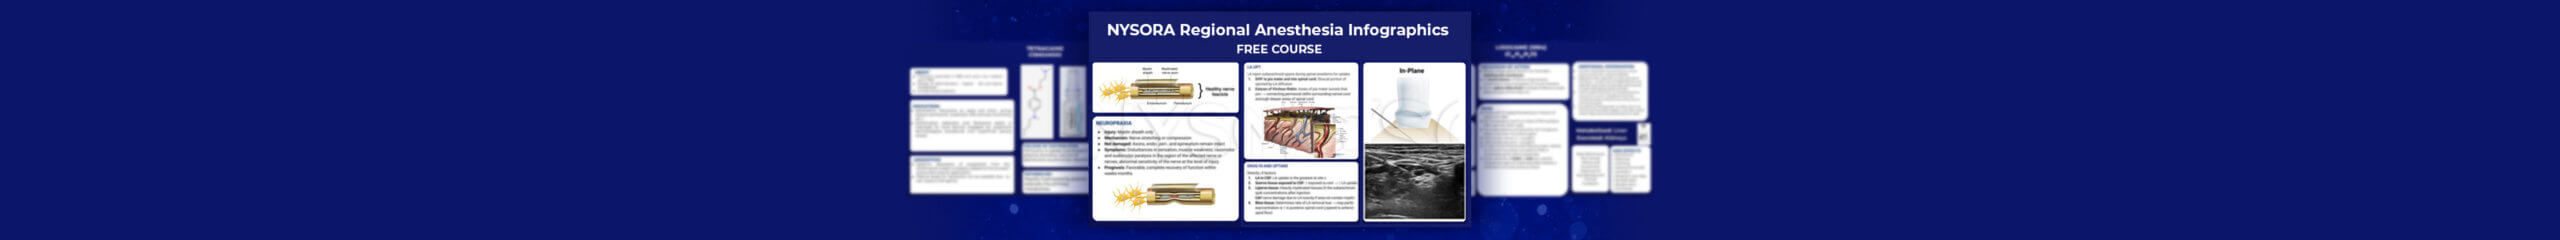 NYSORA Regional Anesthesia Infographics (Flash Cards) – FREE